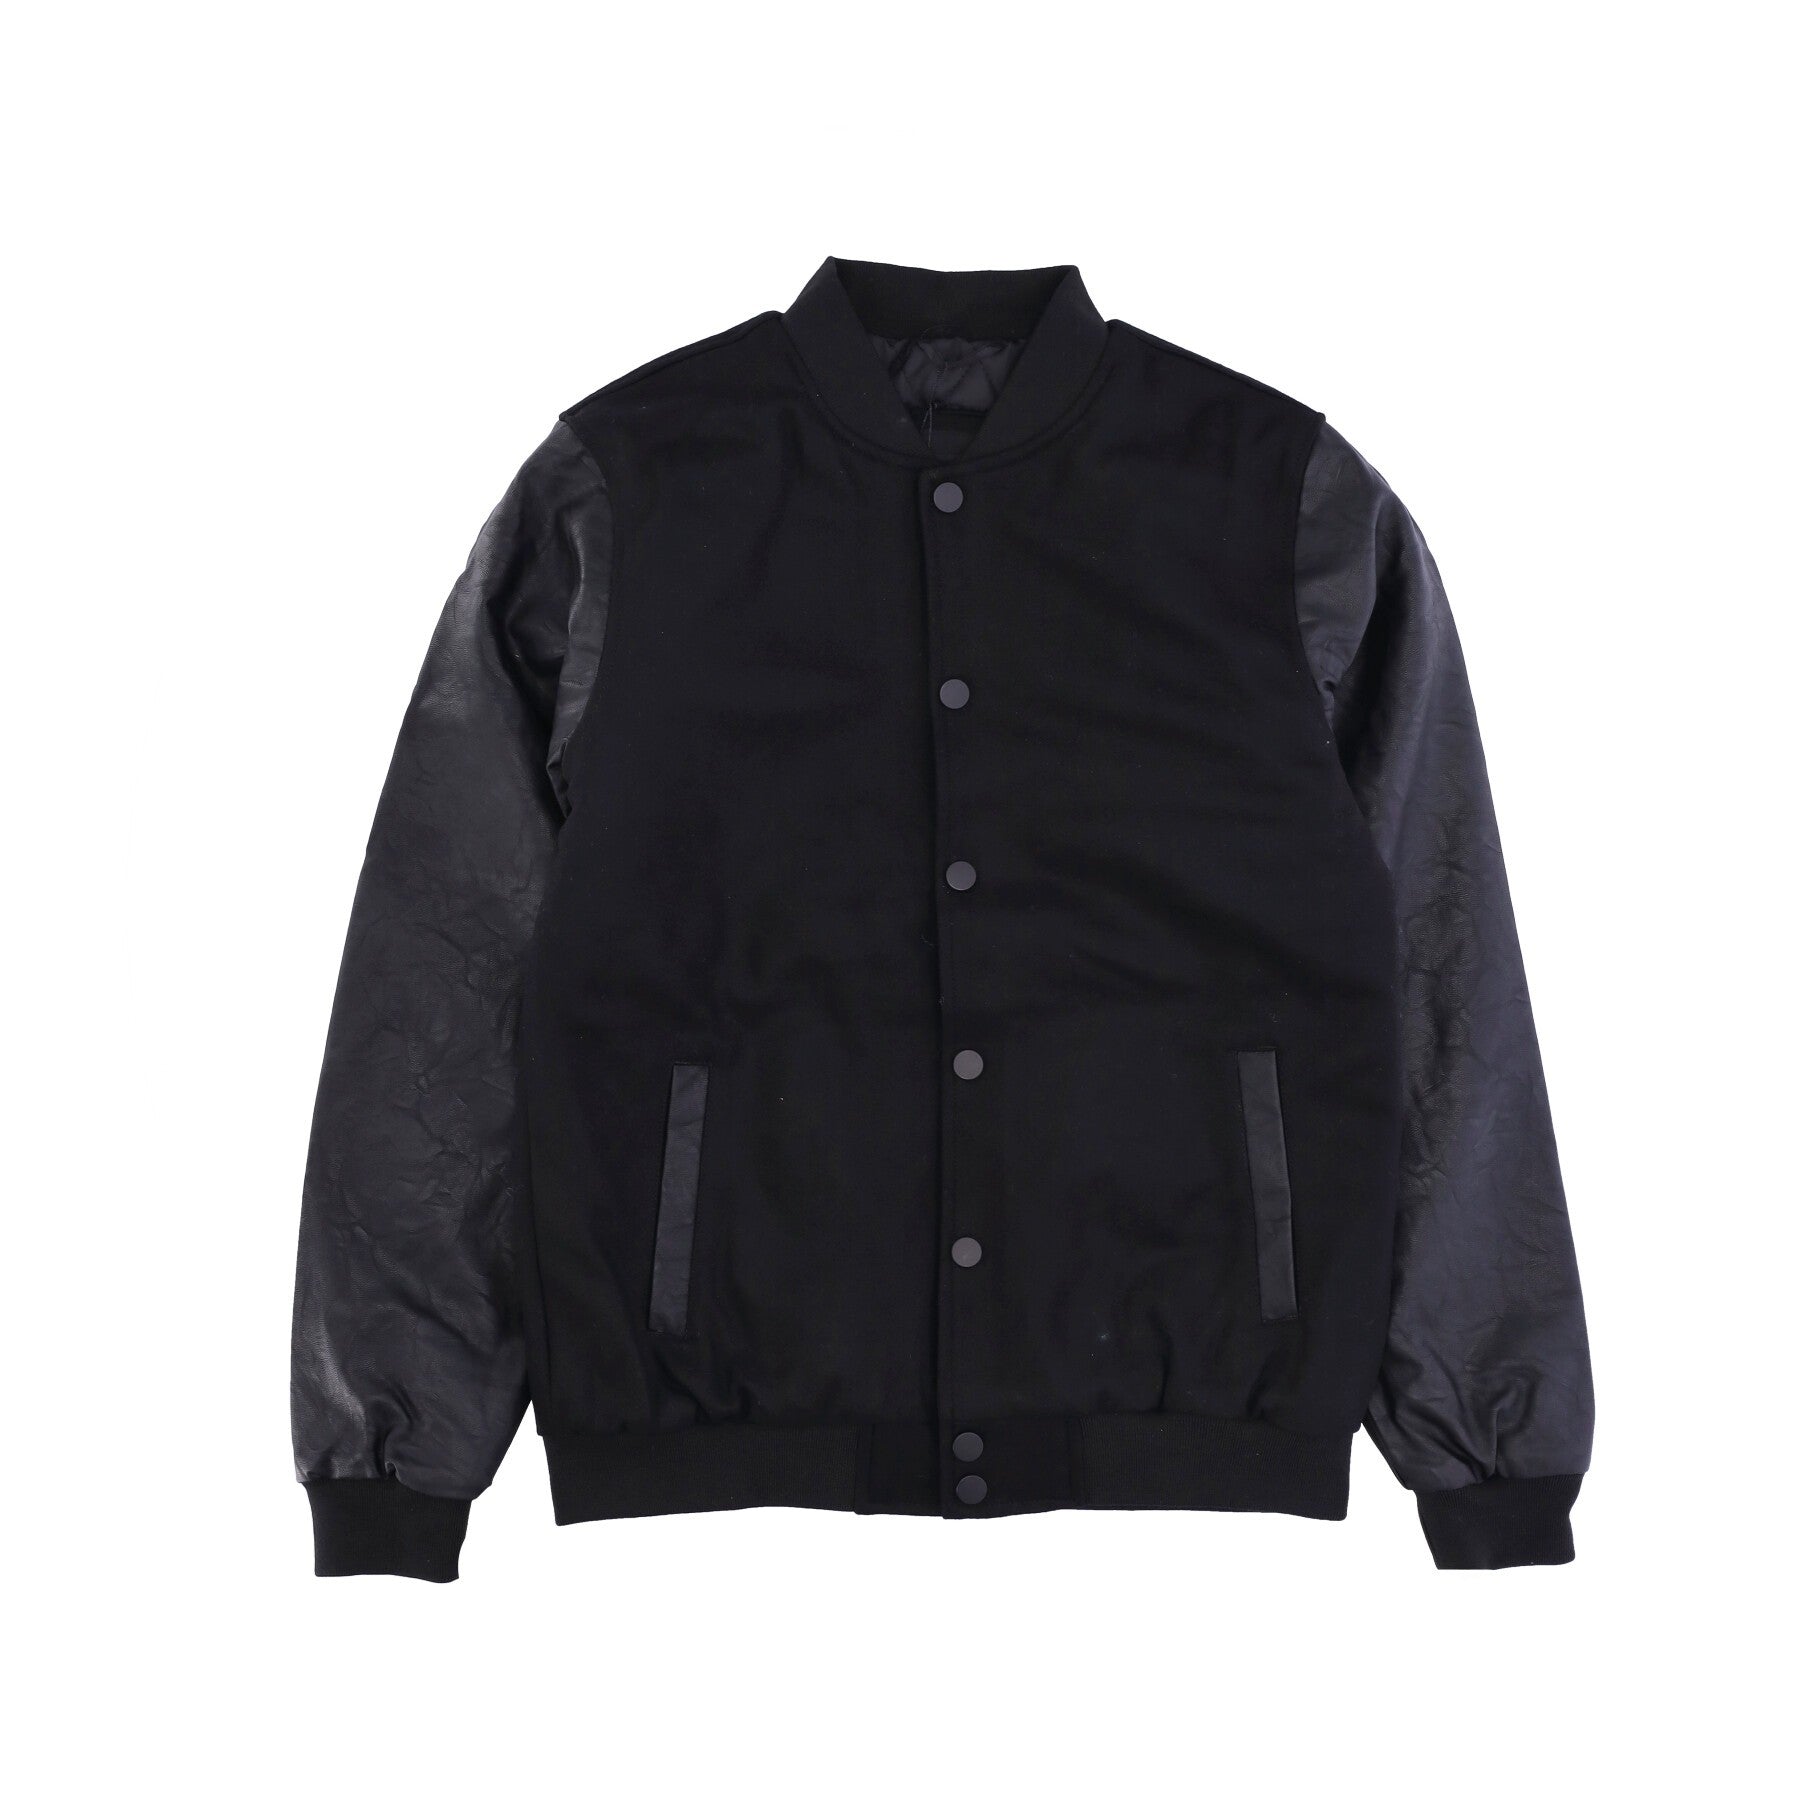 Urban Classics, Giubbotto College Uomo Oldschool College Jacket, Black/black